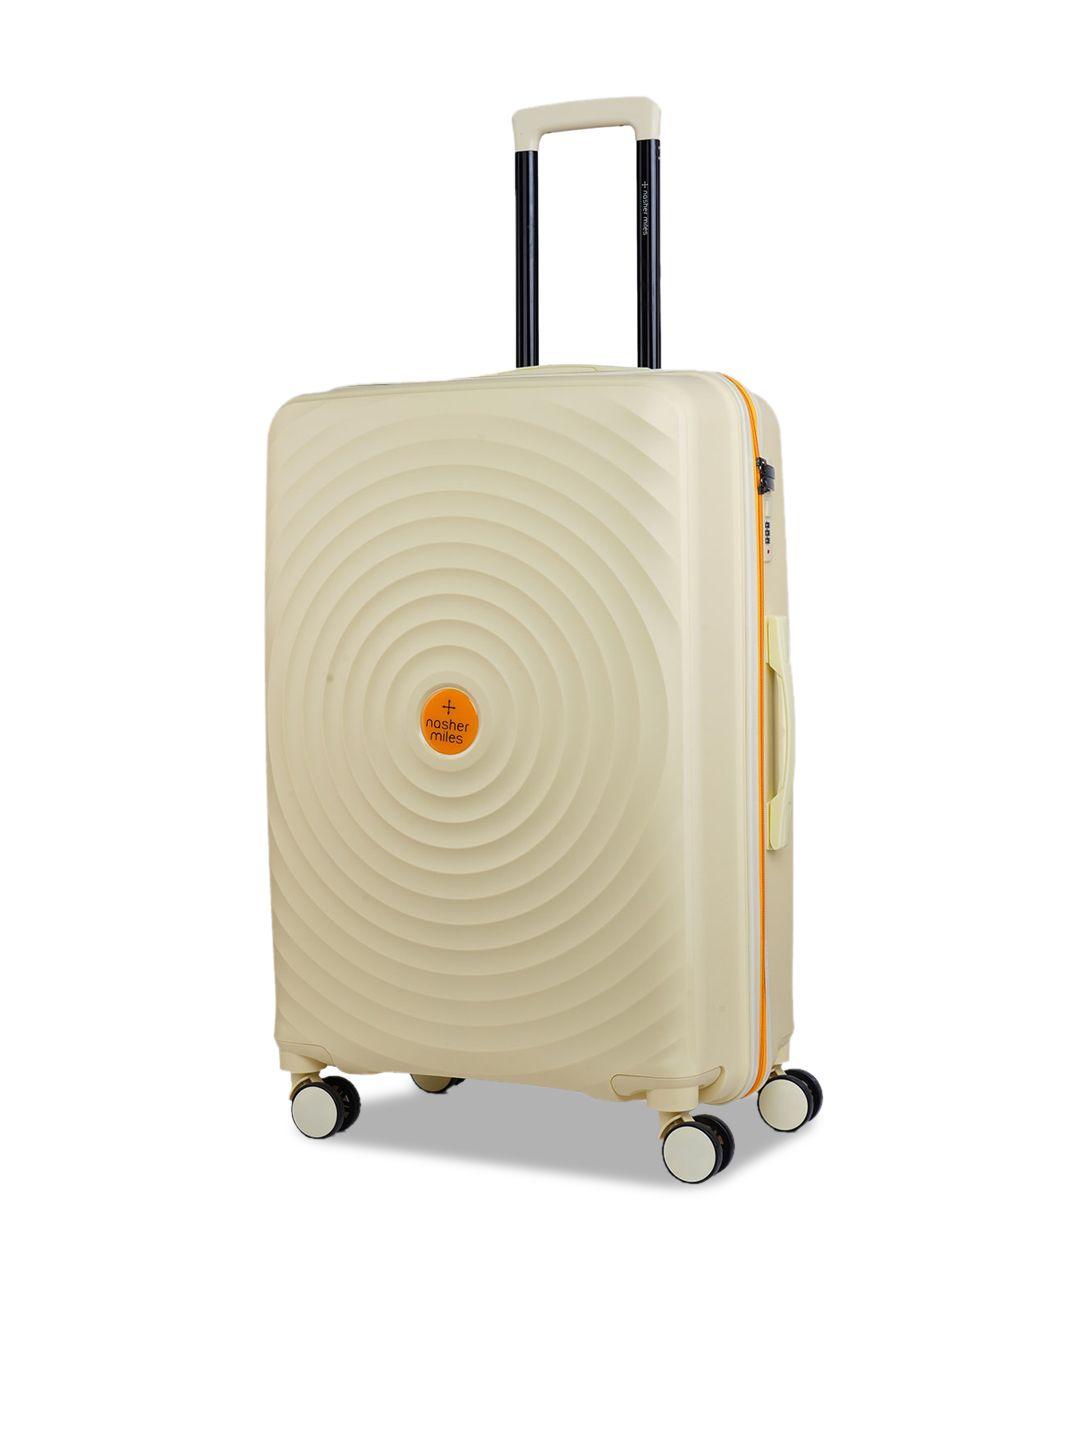 nasher miles goa textured hard-sided luggage trolley bag- 75 cm